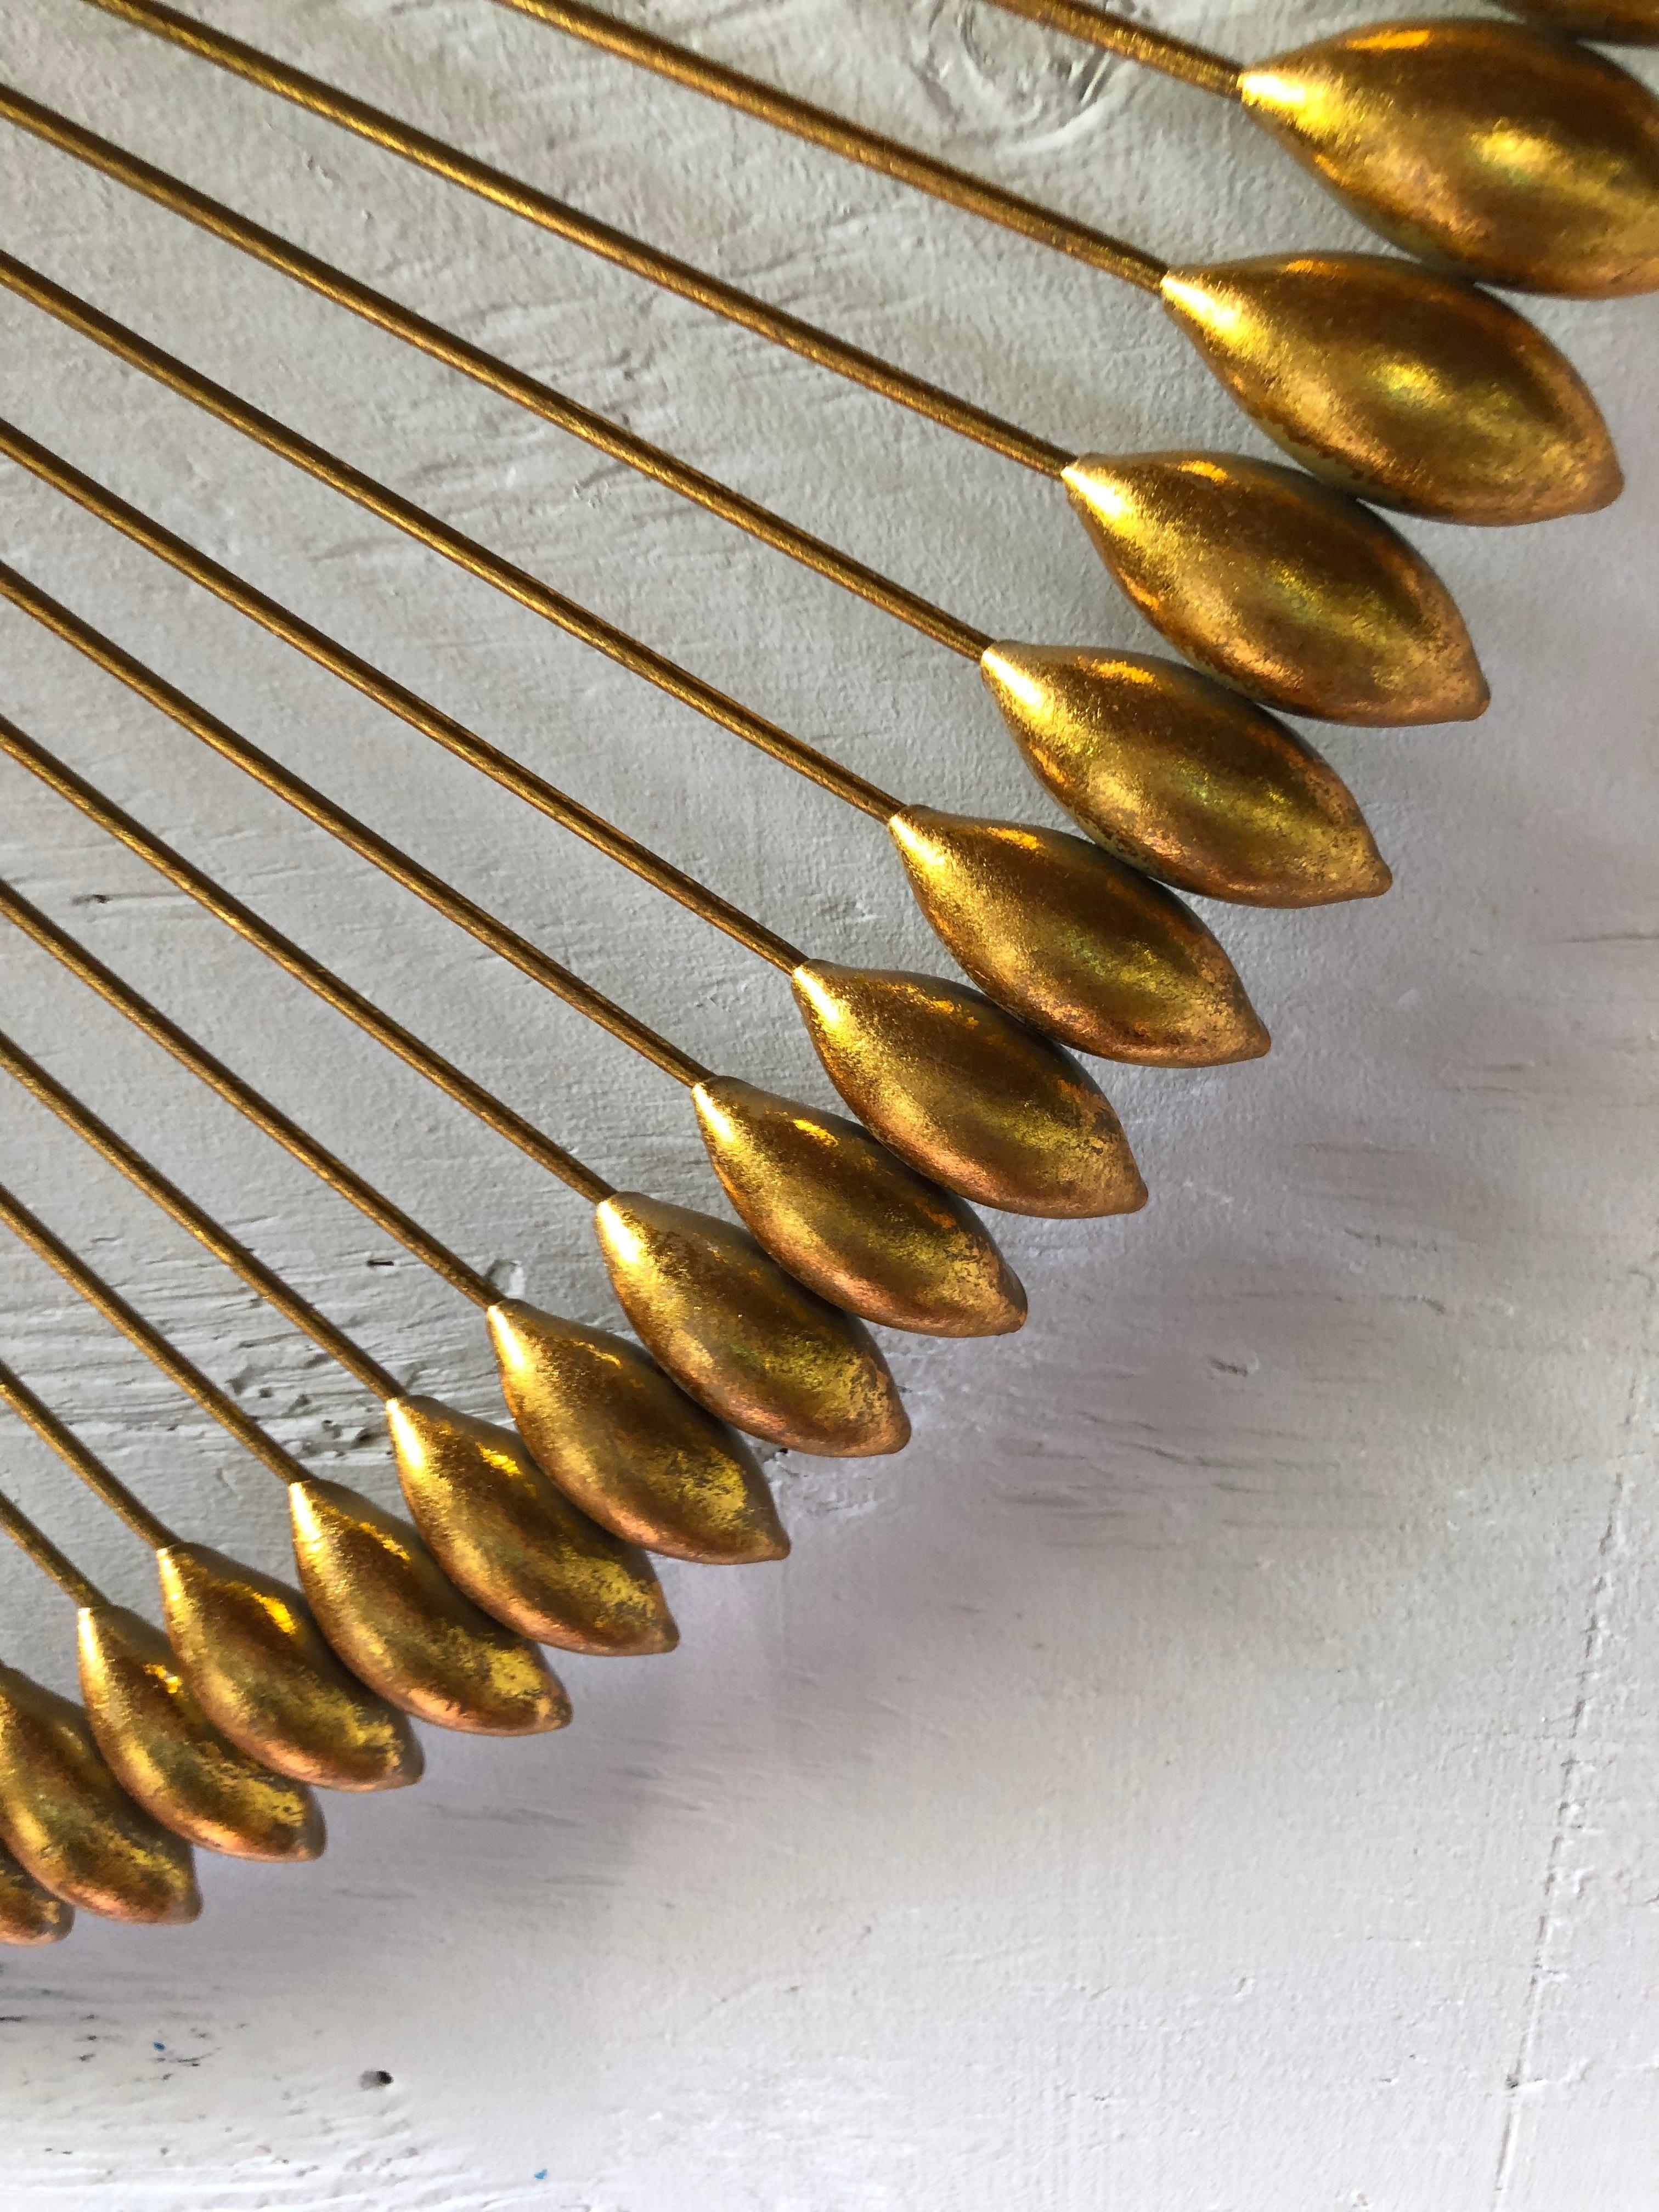 Striking designer gilded metal large round wall art resembling arrows artfully arranged in a circle.